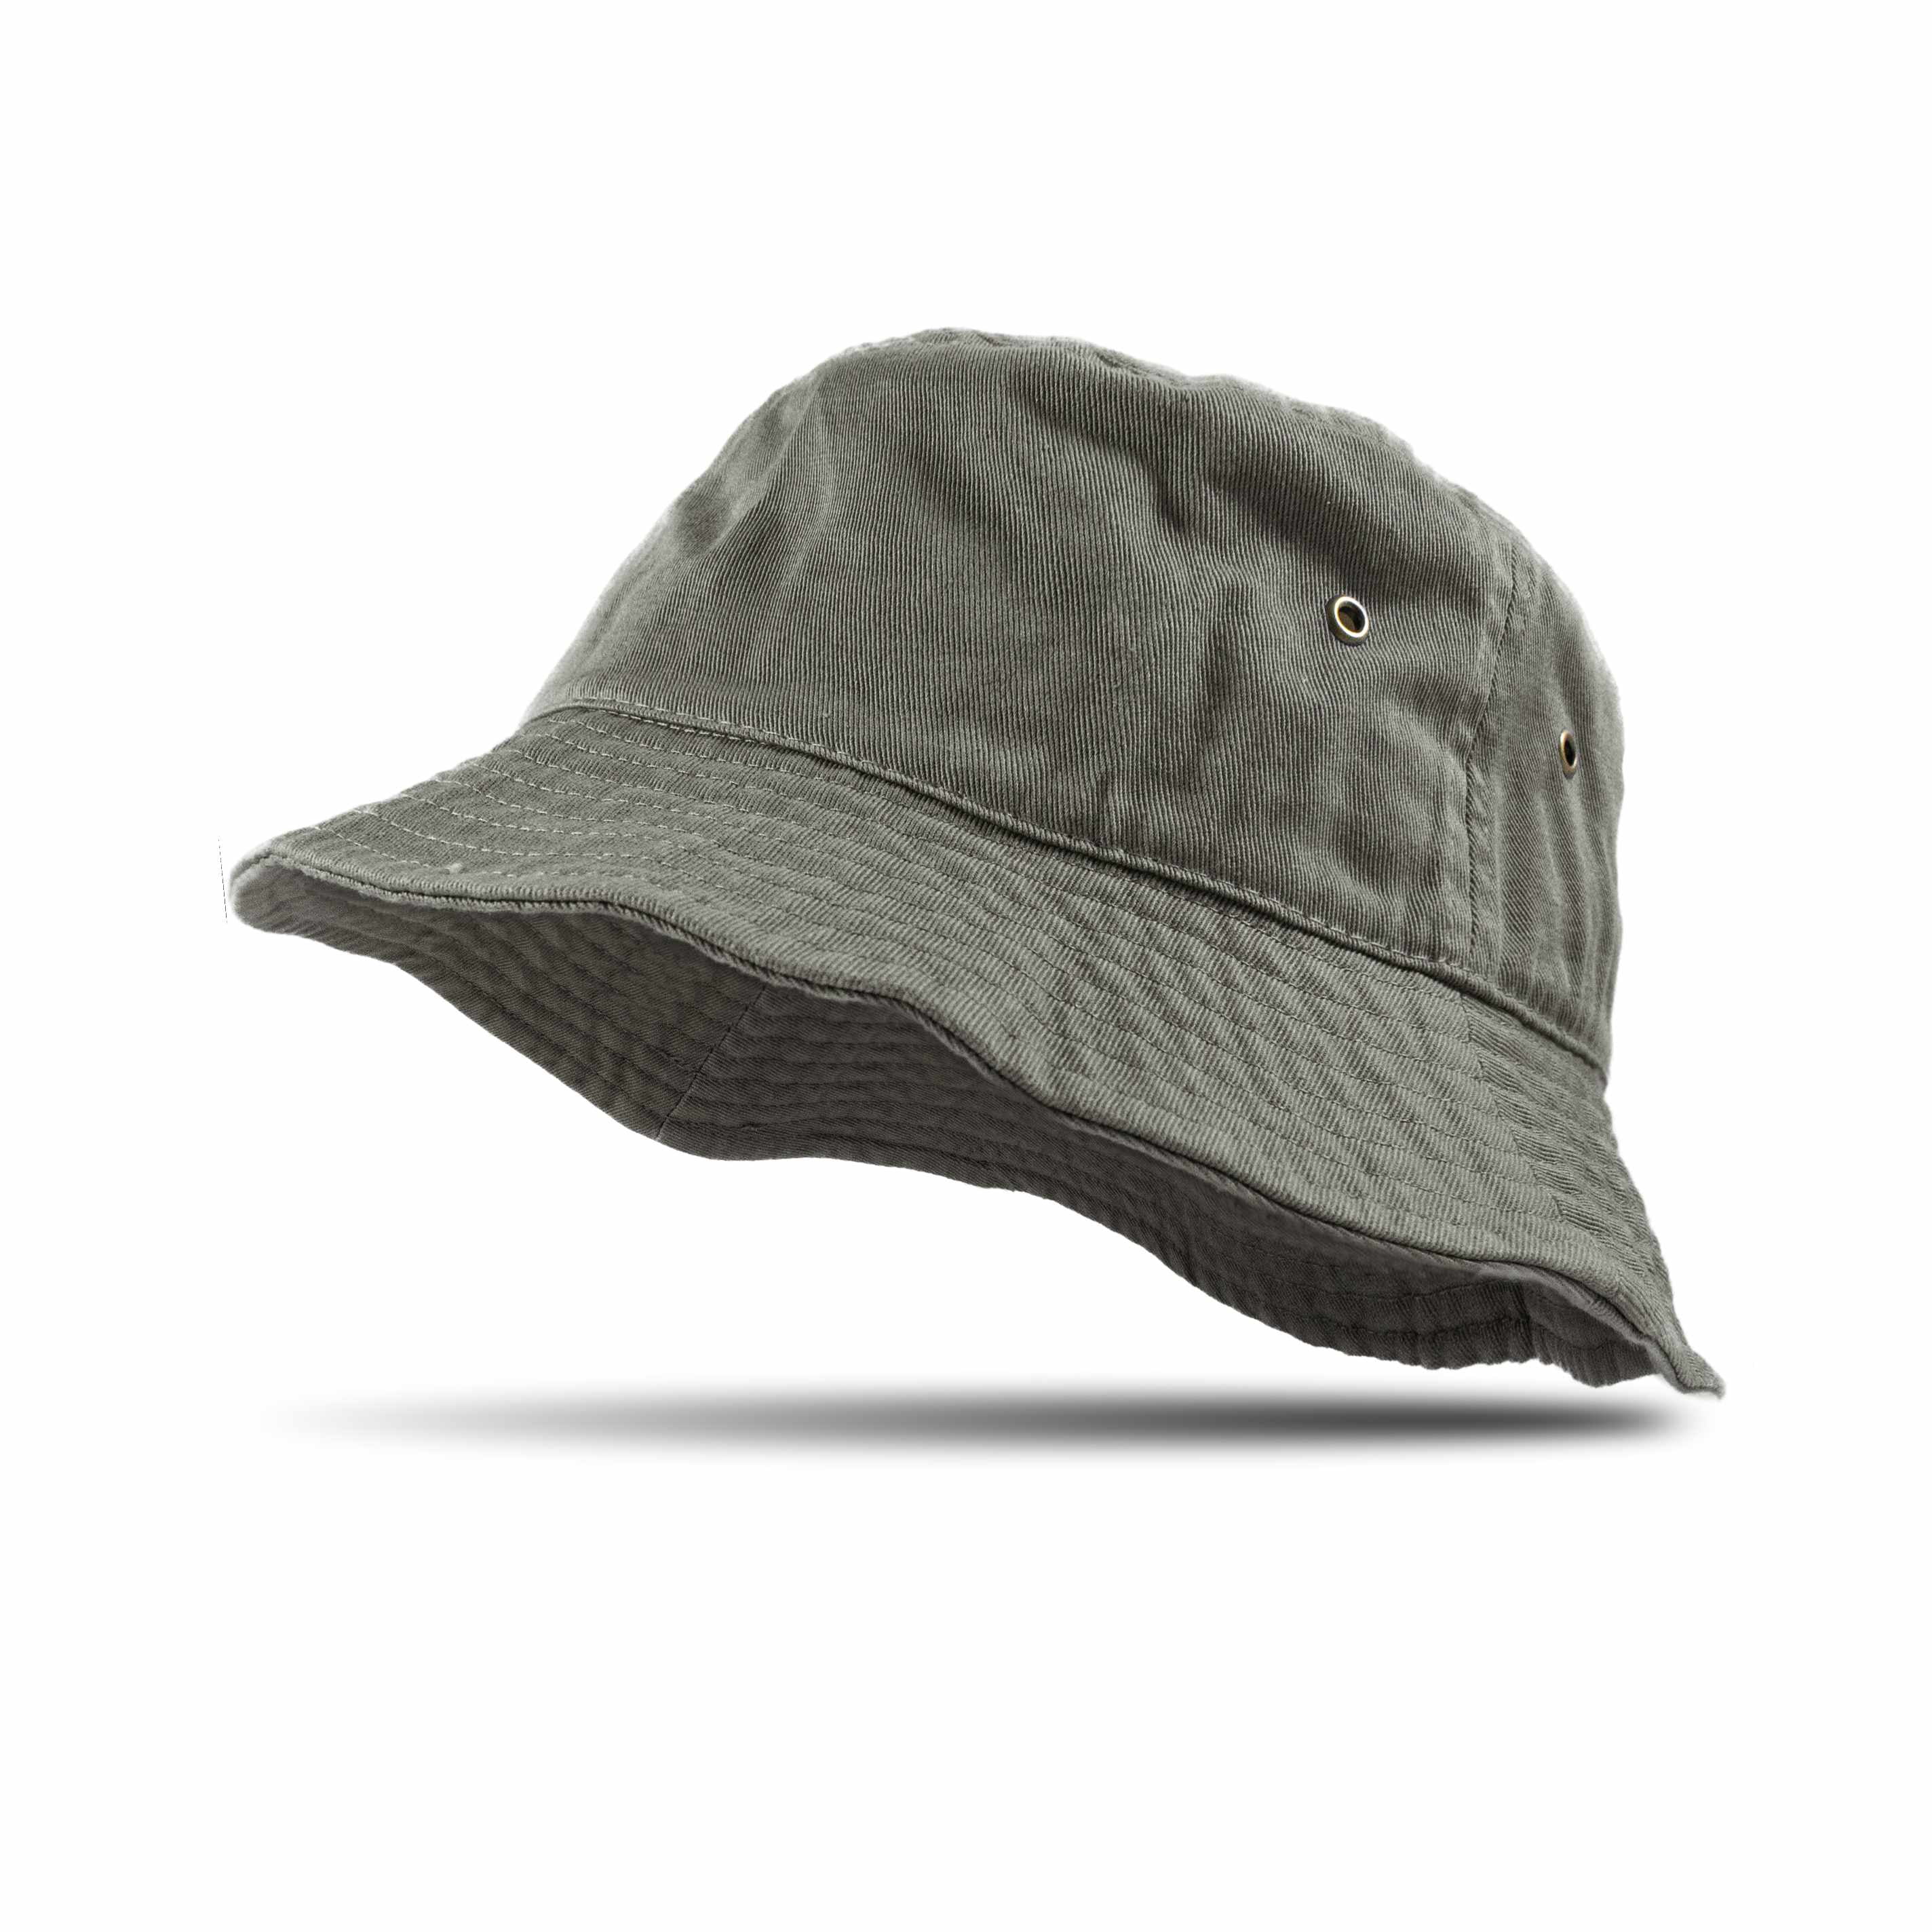 Bucket Hat 100% Cotton Packable Summer Travel Cap Sun hat for Men and Women  White L/XL 